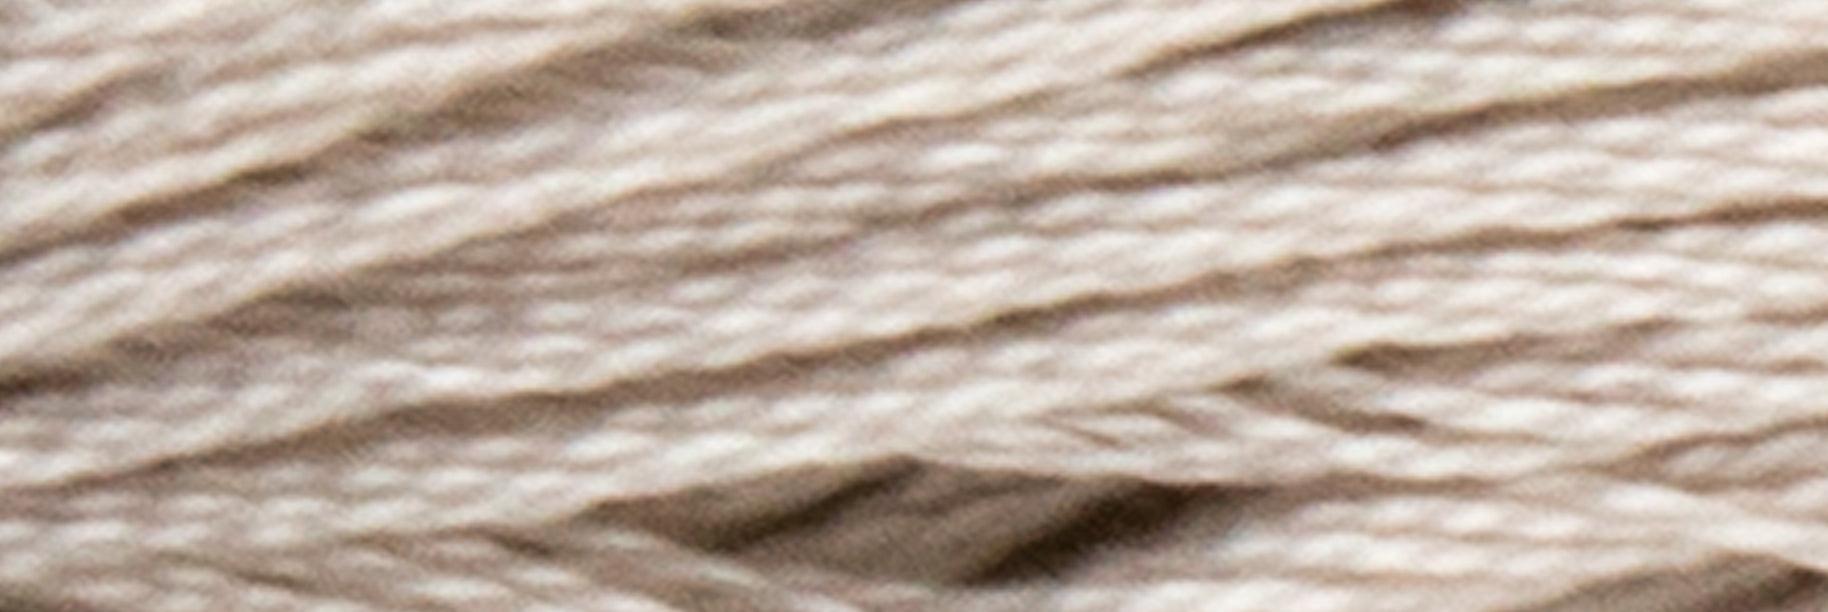 Stranded Cotton Luca-S - 430 / DMC 453 / Anchor 231 Stranded Cotton - HobbyJobby